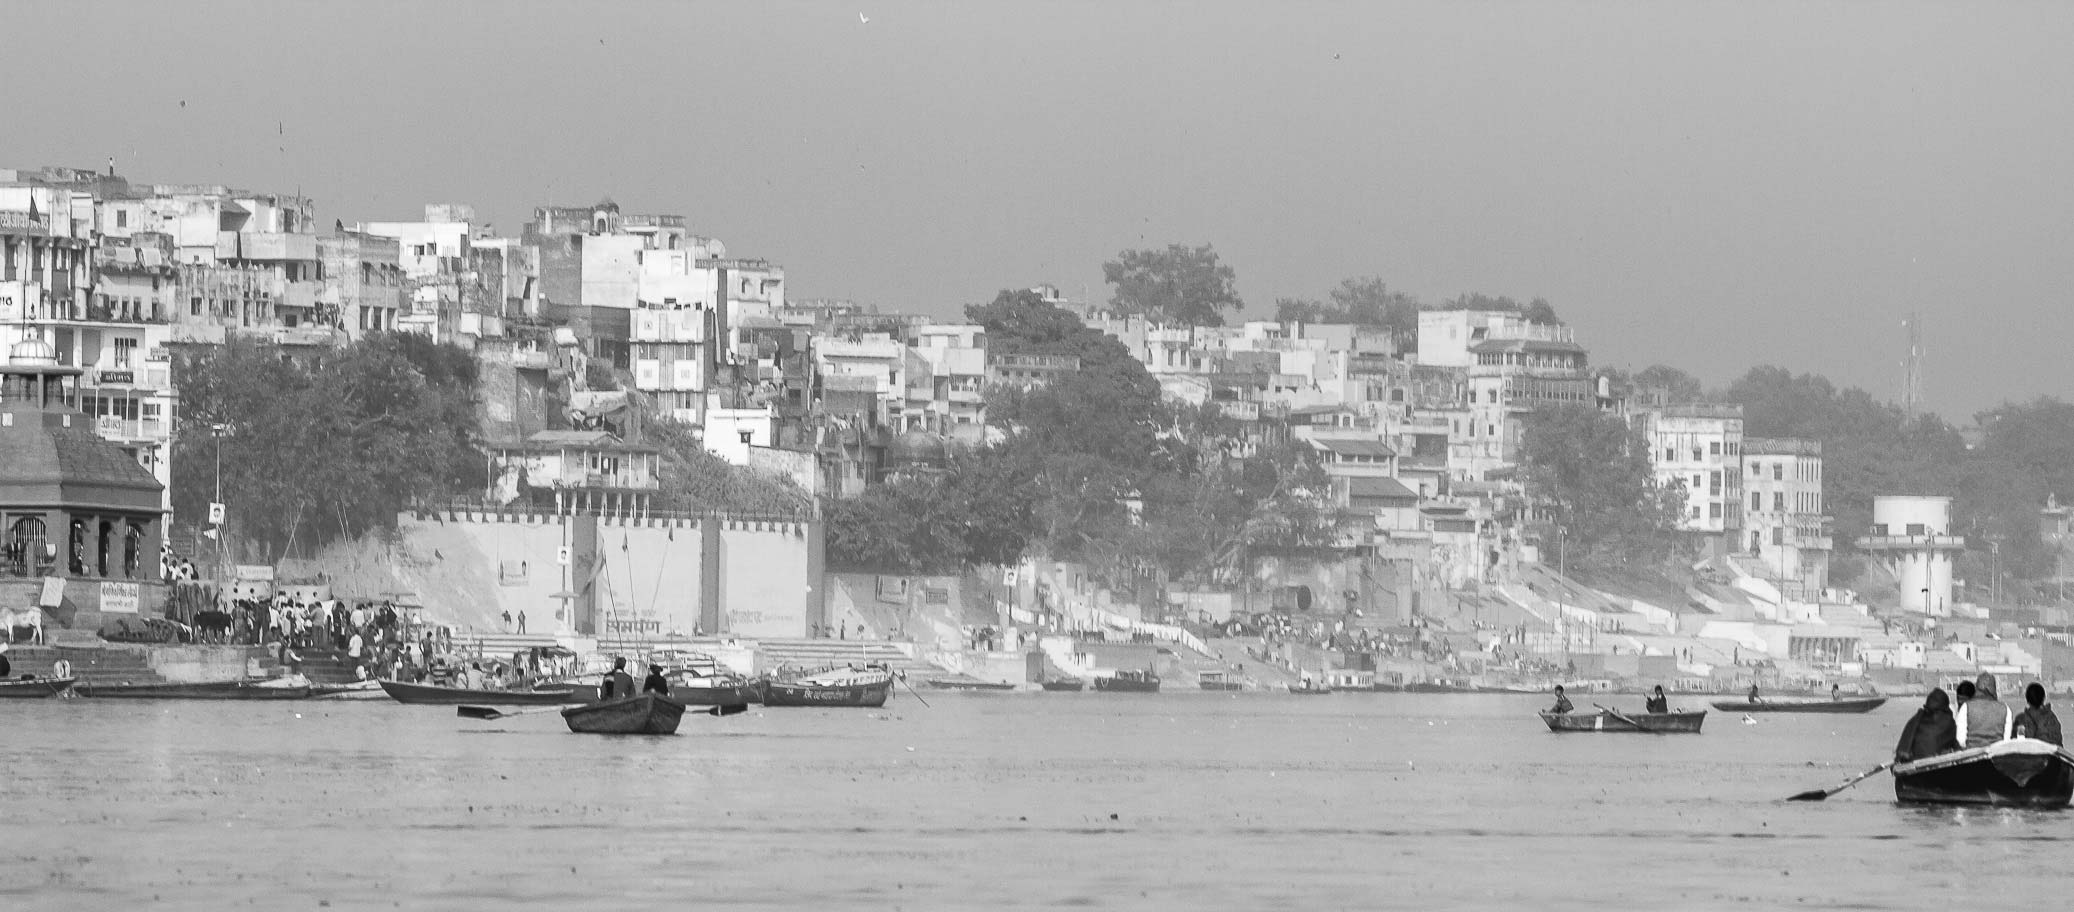 /Guewen/galeries/public/Voyages/Inde/varanasi/gange/Ganga-1/Varanasi-gange_020.jpg